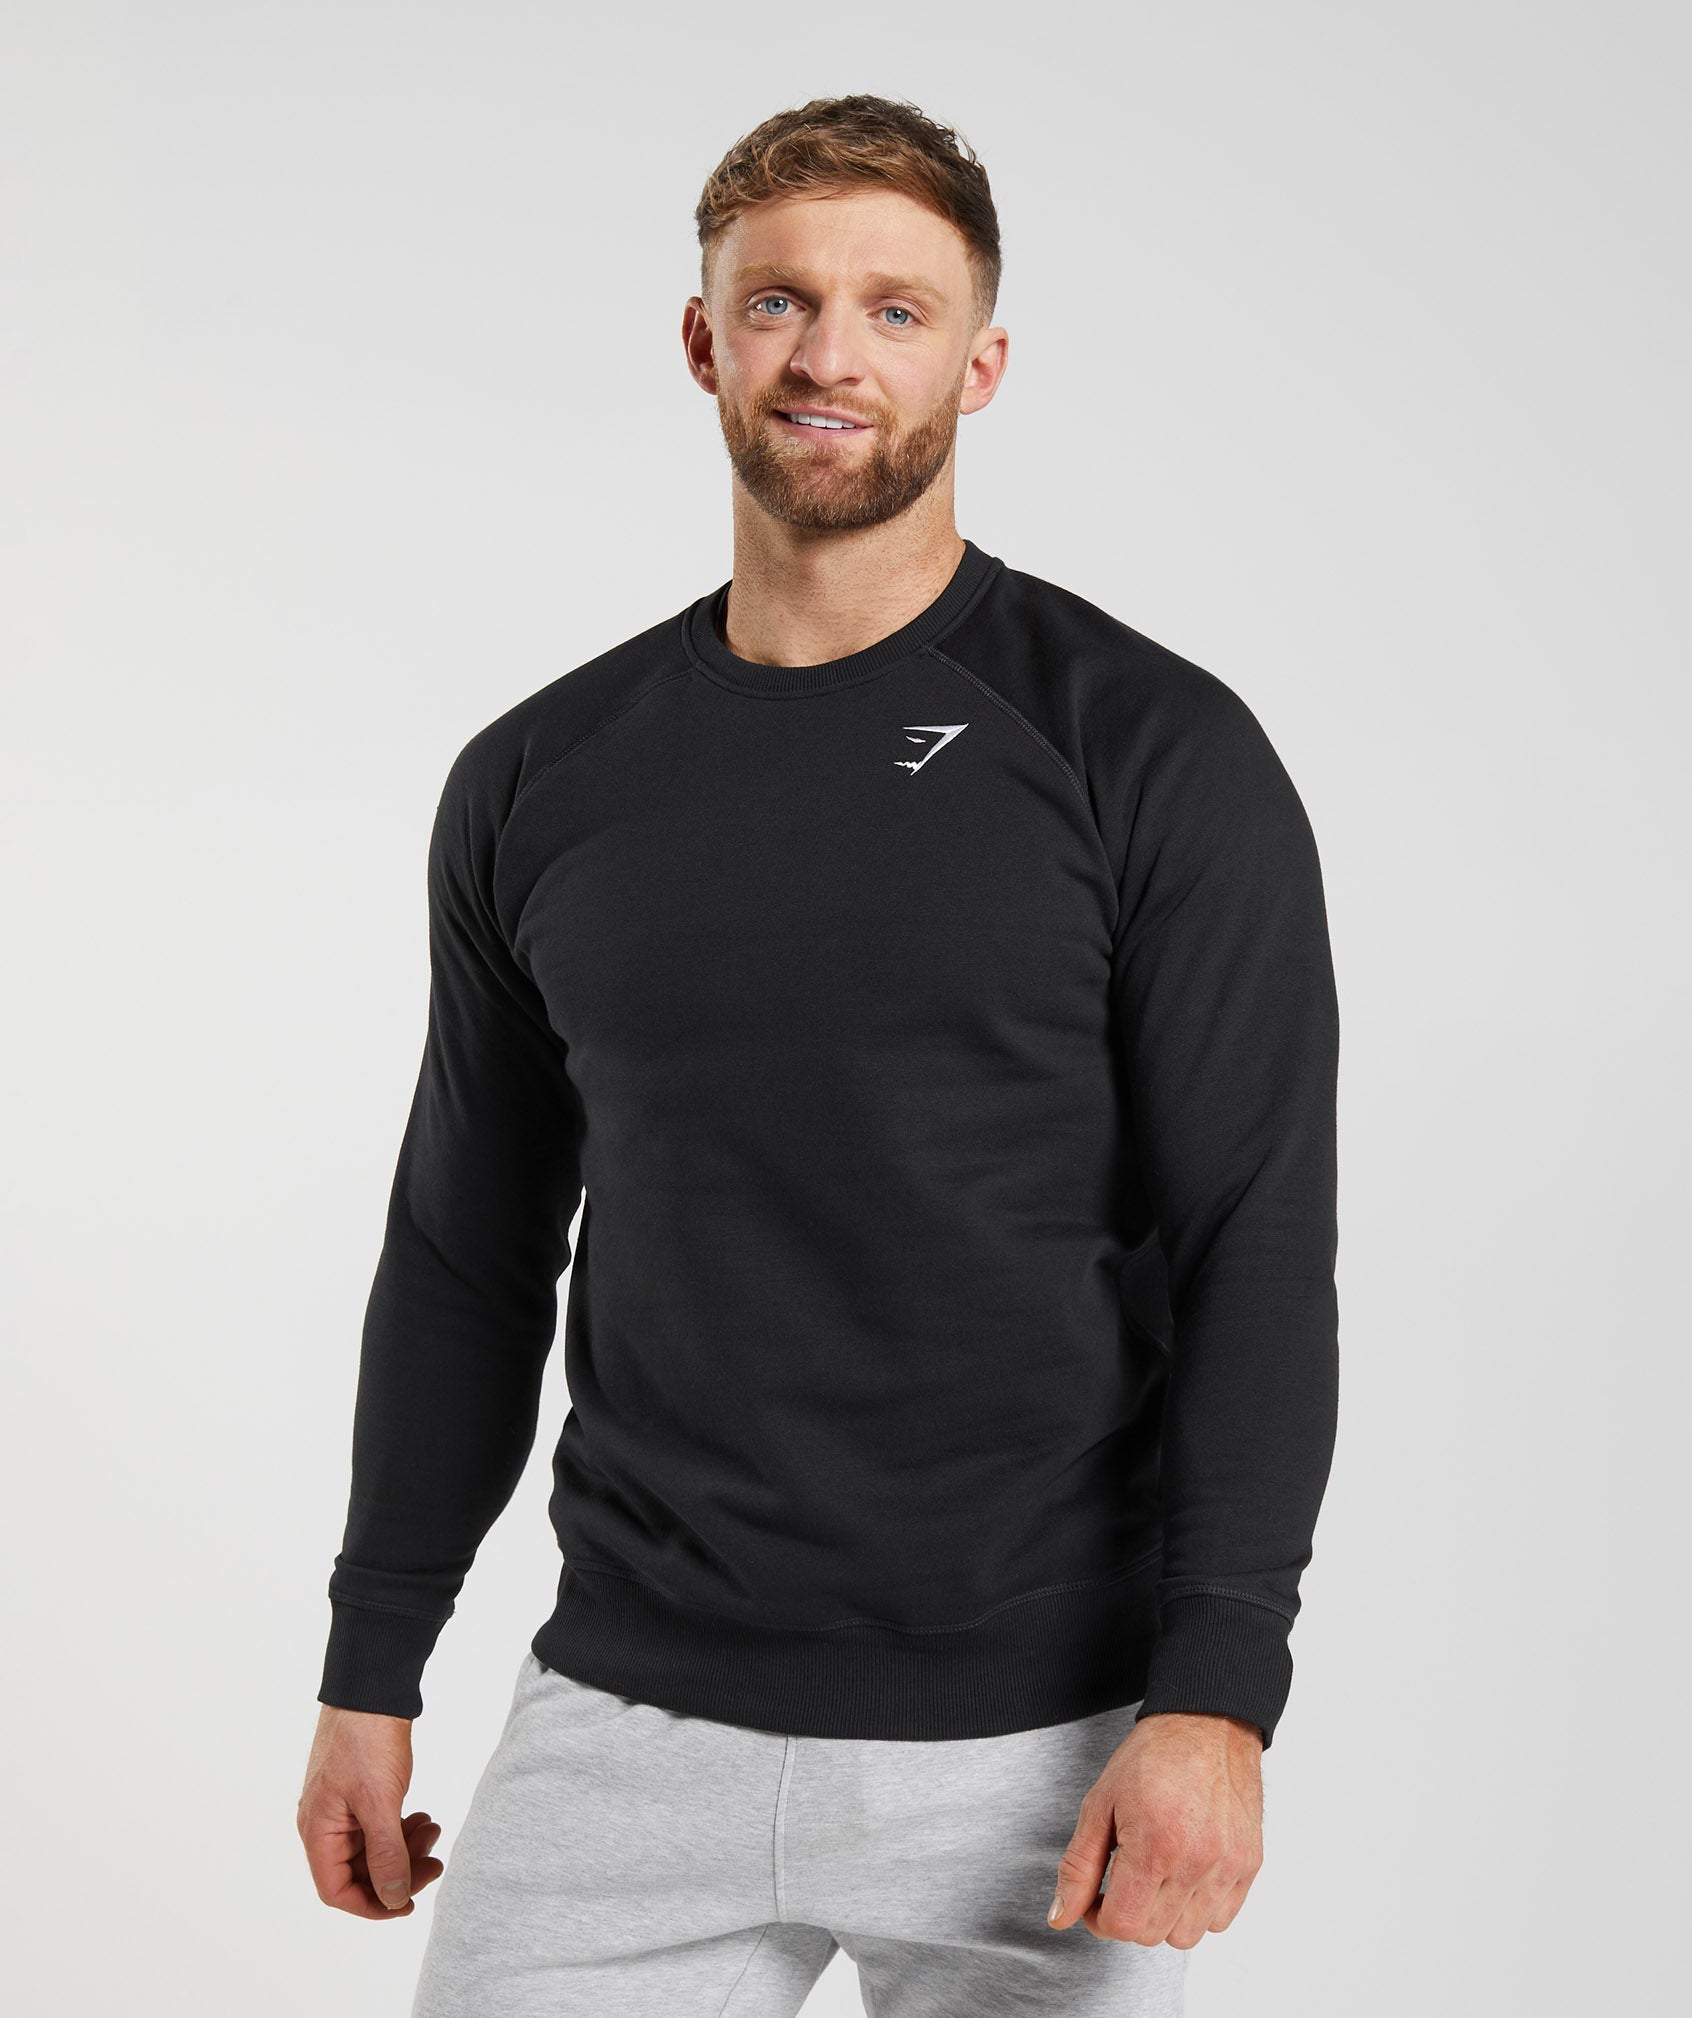 Gymshark Crest Sweatshirt - Black